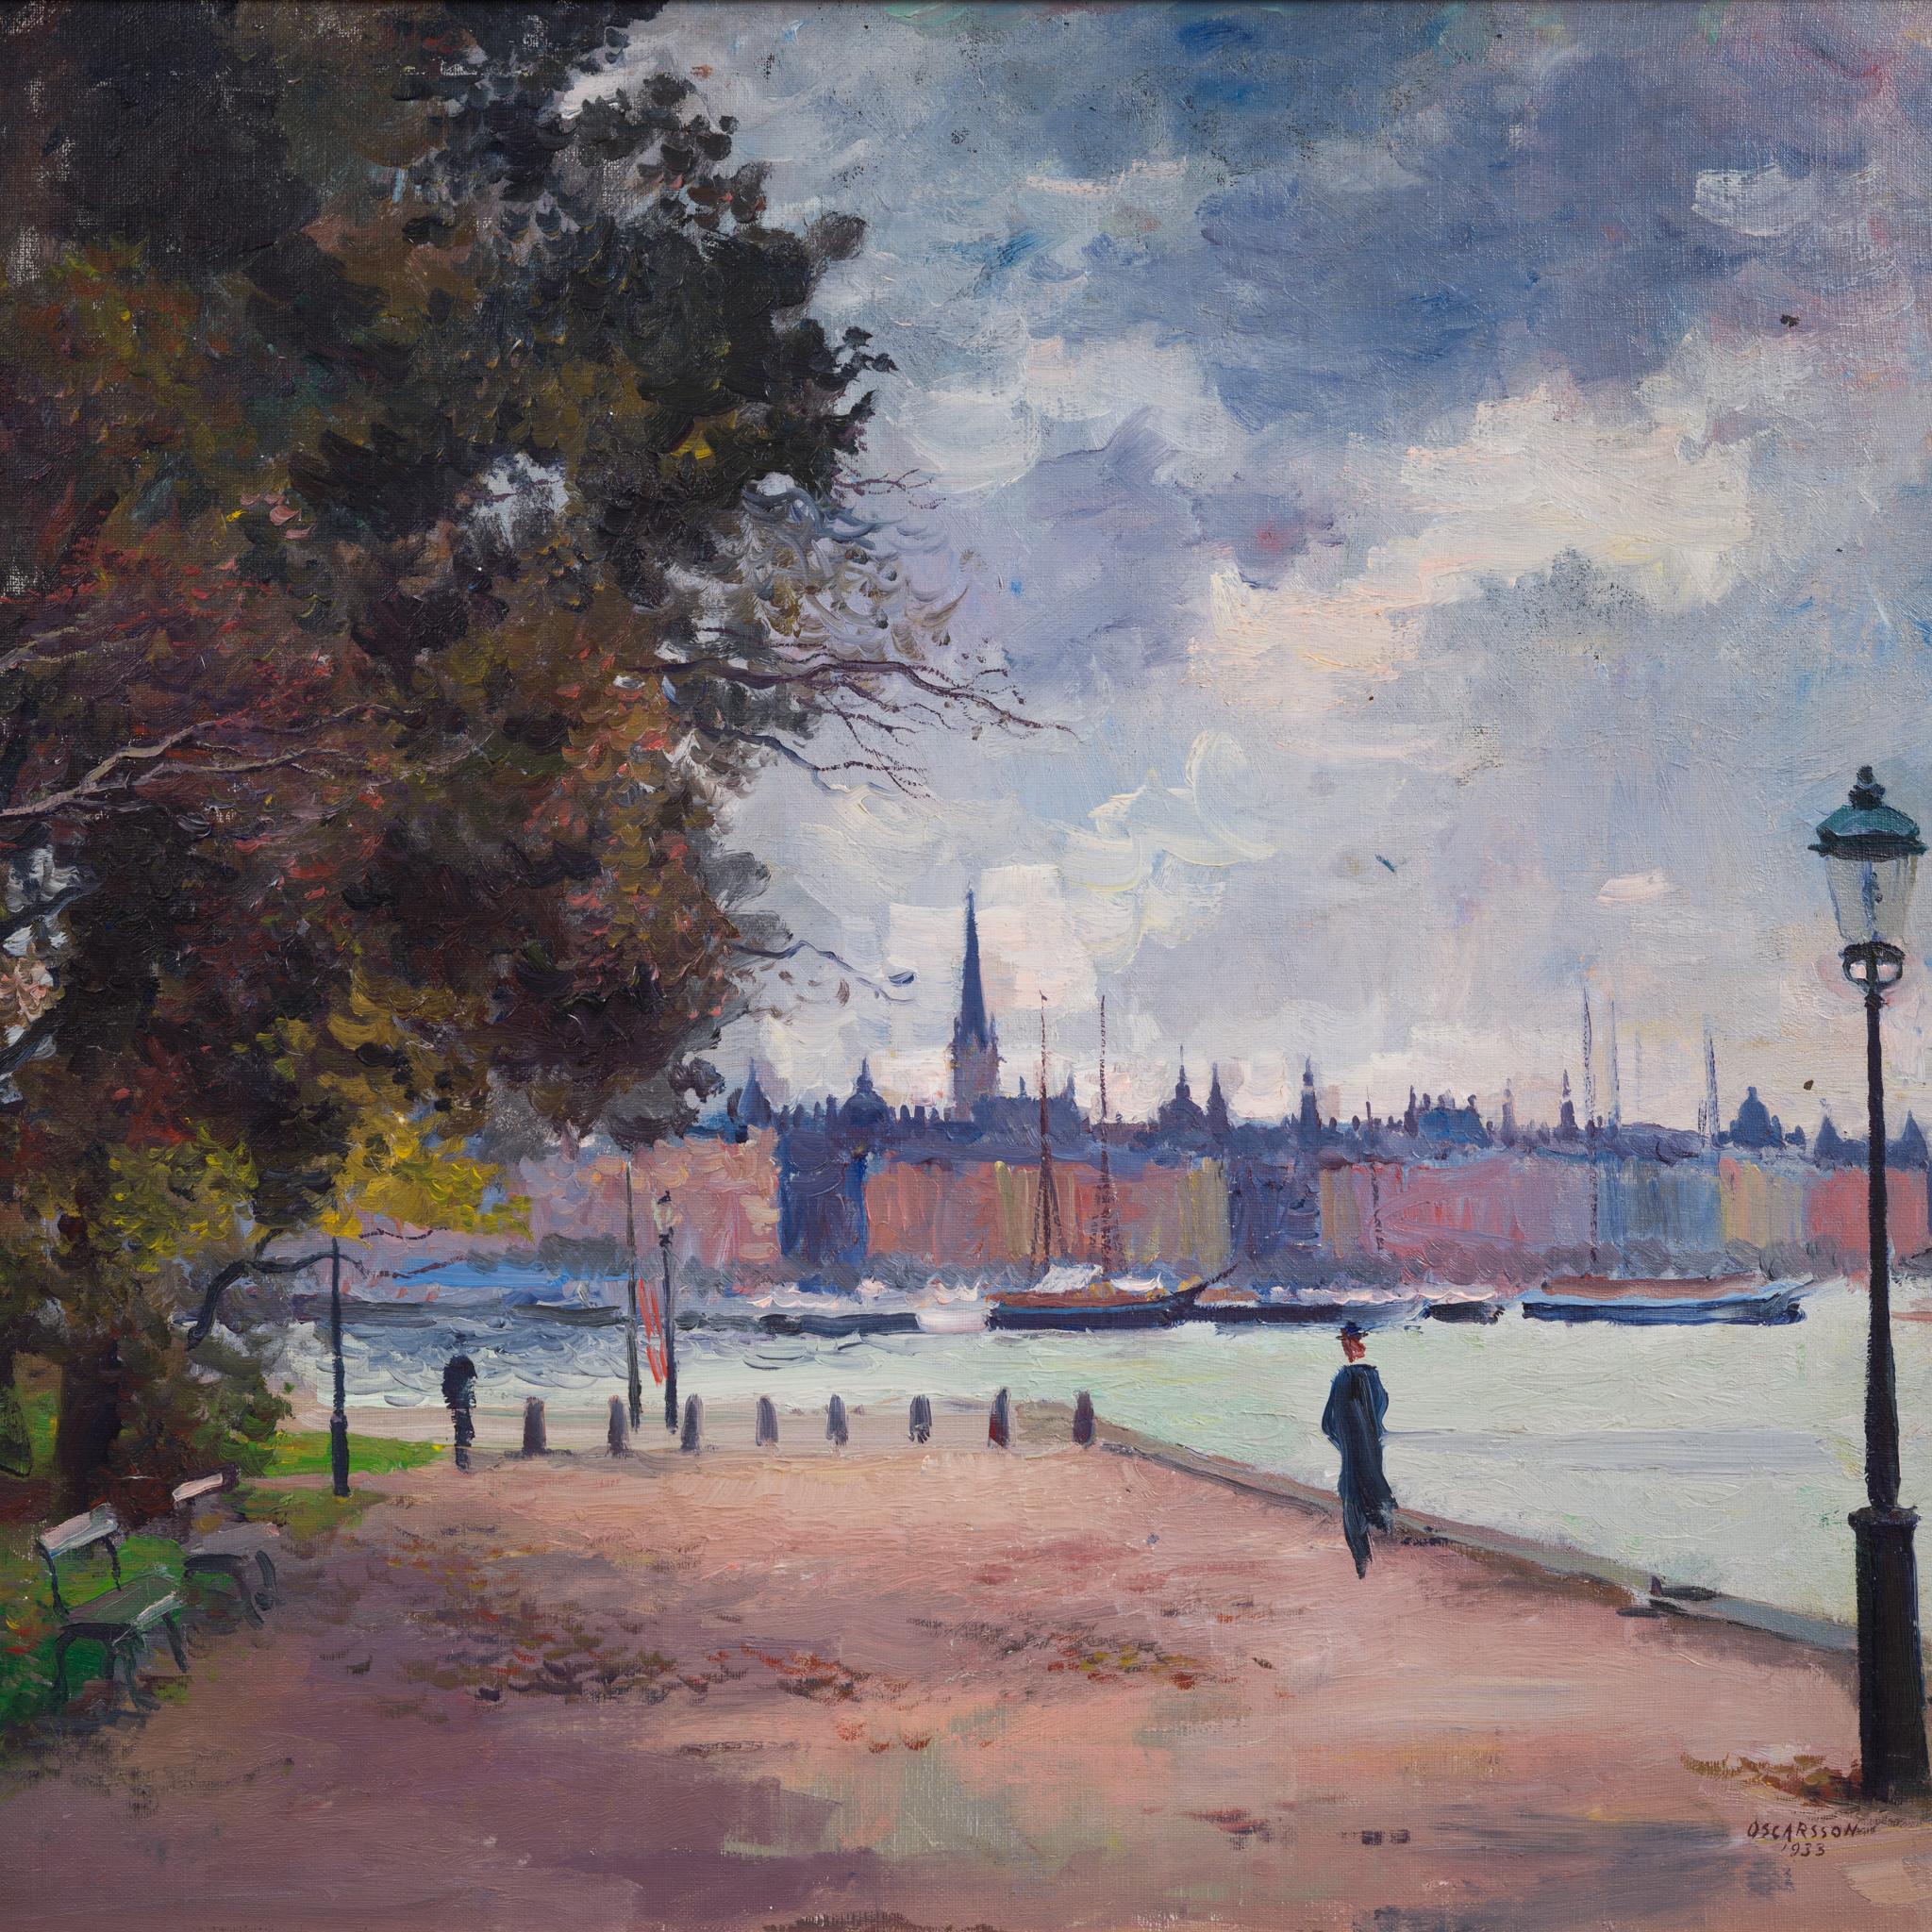 Impressionistic View over Strandvägen, Stockholm - Painting by Bernhard Oscarsson